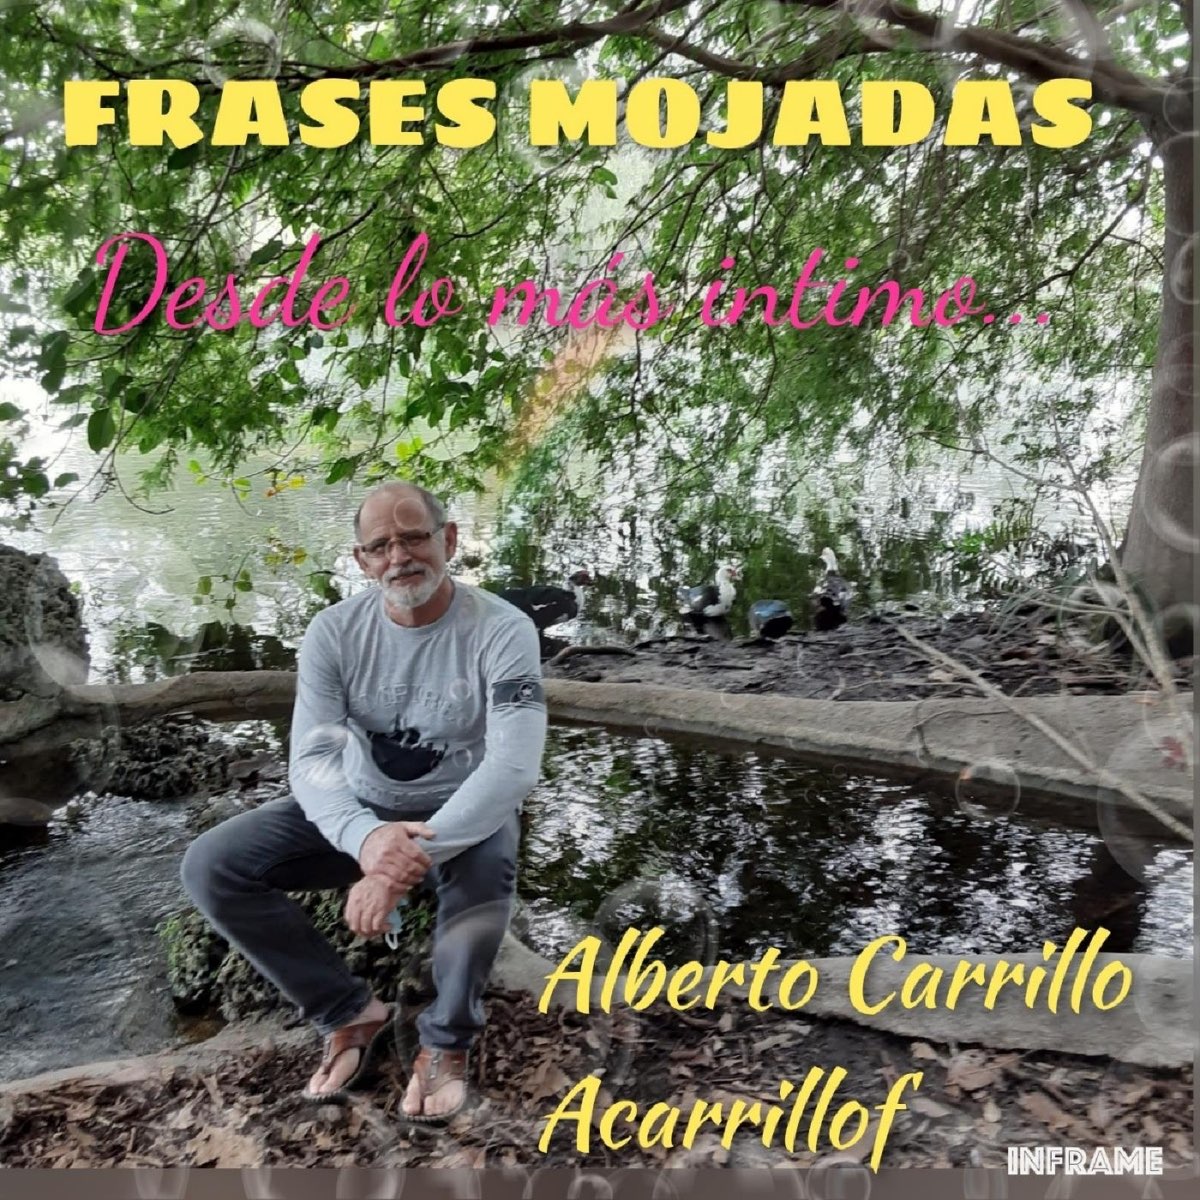 Frases Mojadas - Single de Alberto Carrillo en Apple Music